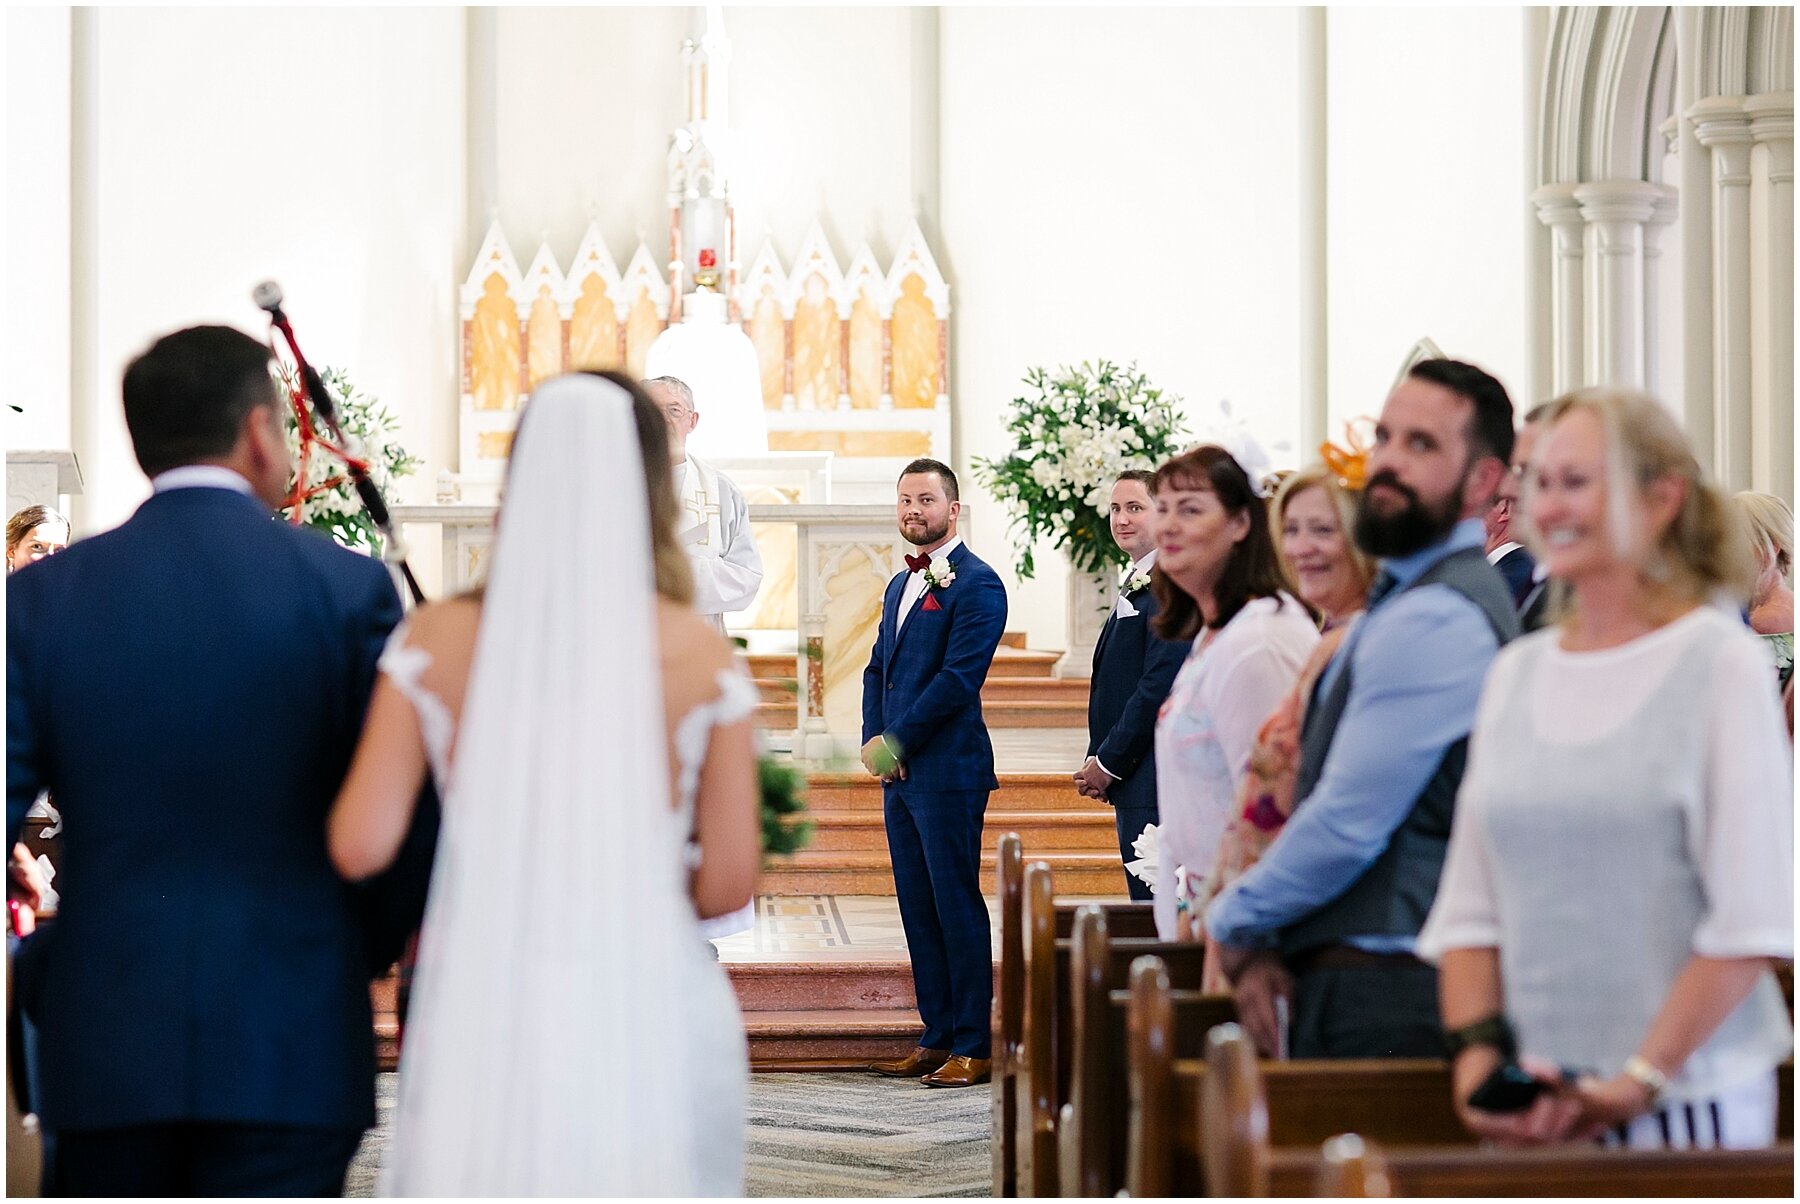 Perth Wedding | St Josephs Church Subiaco